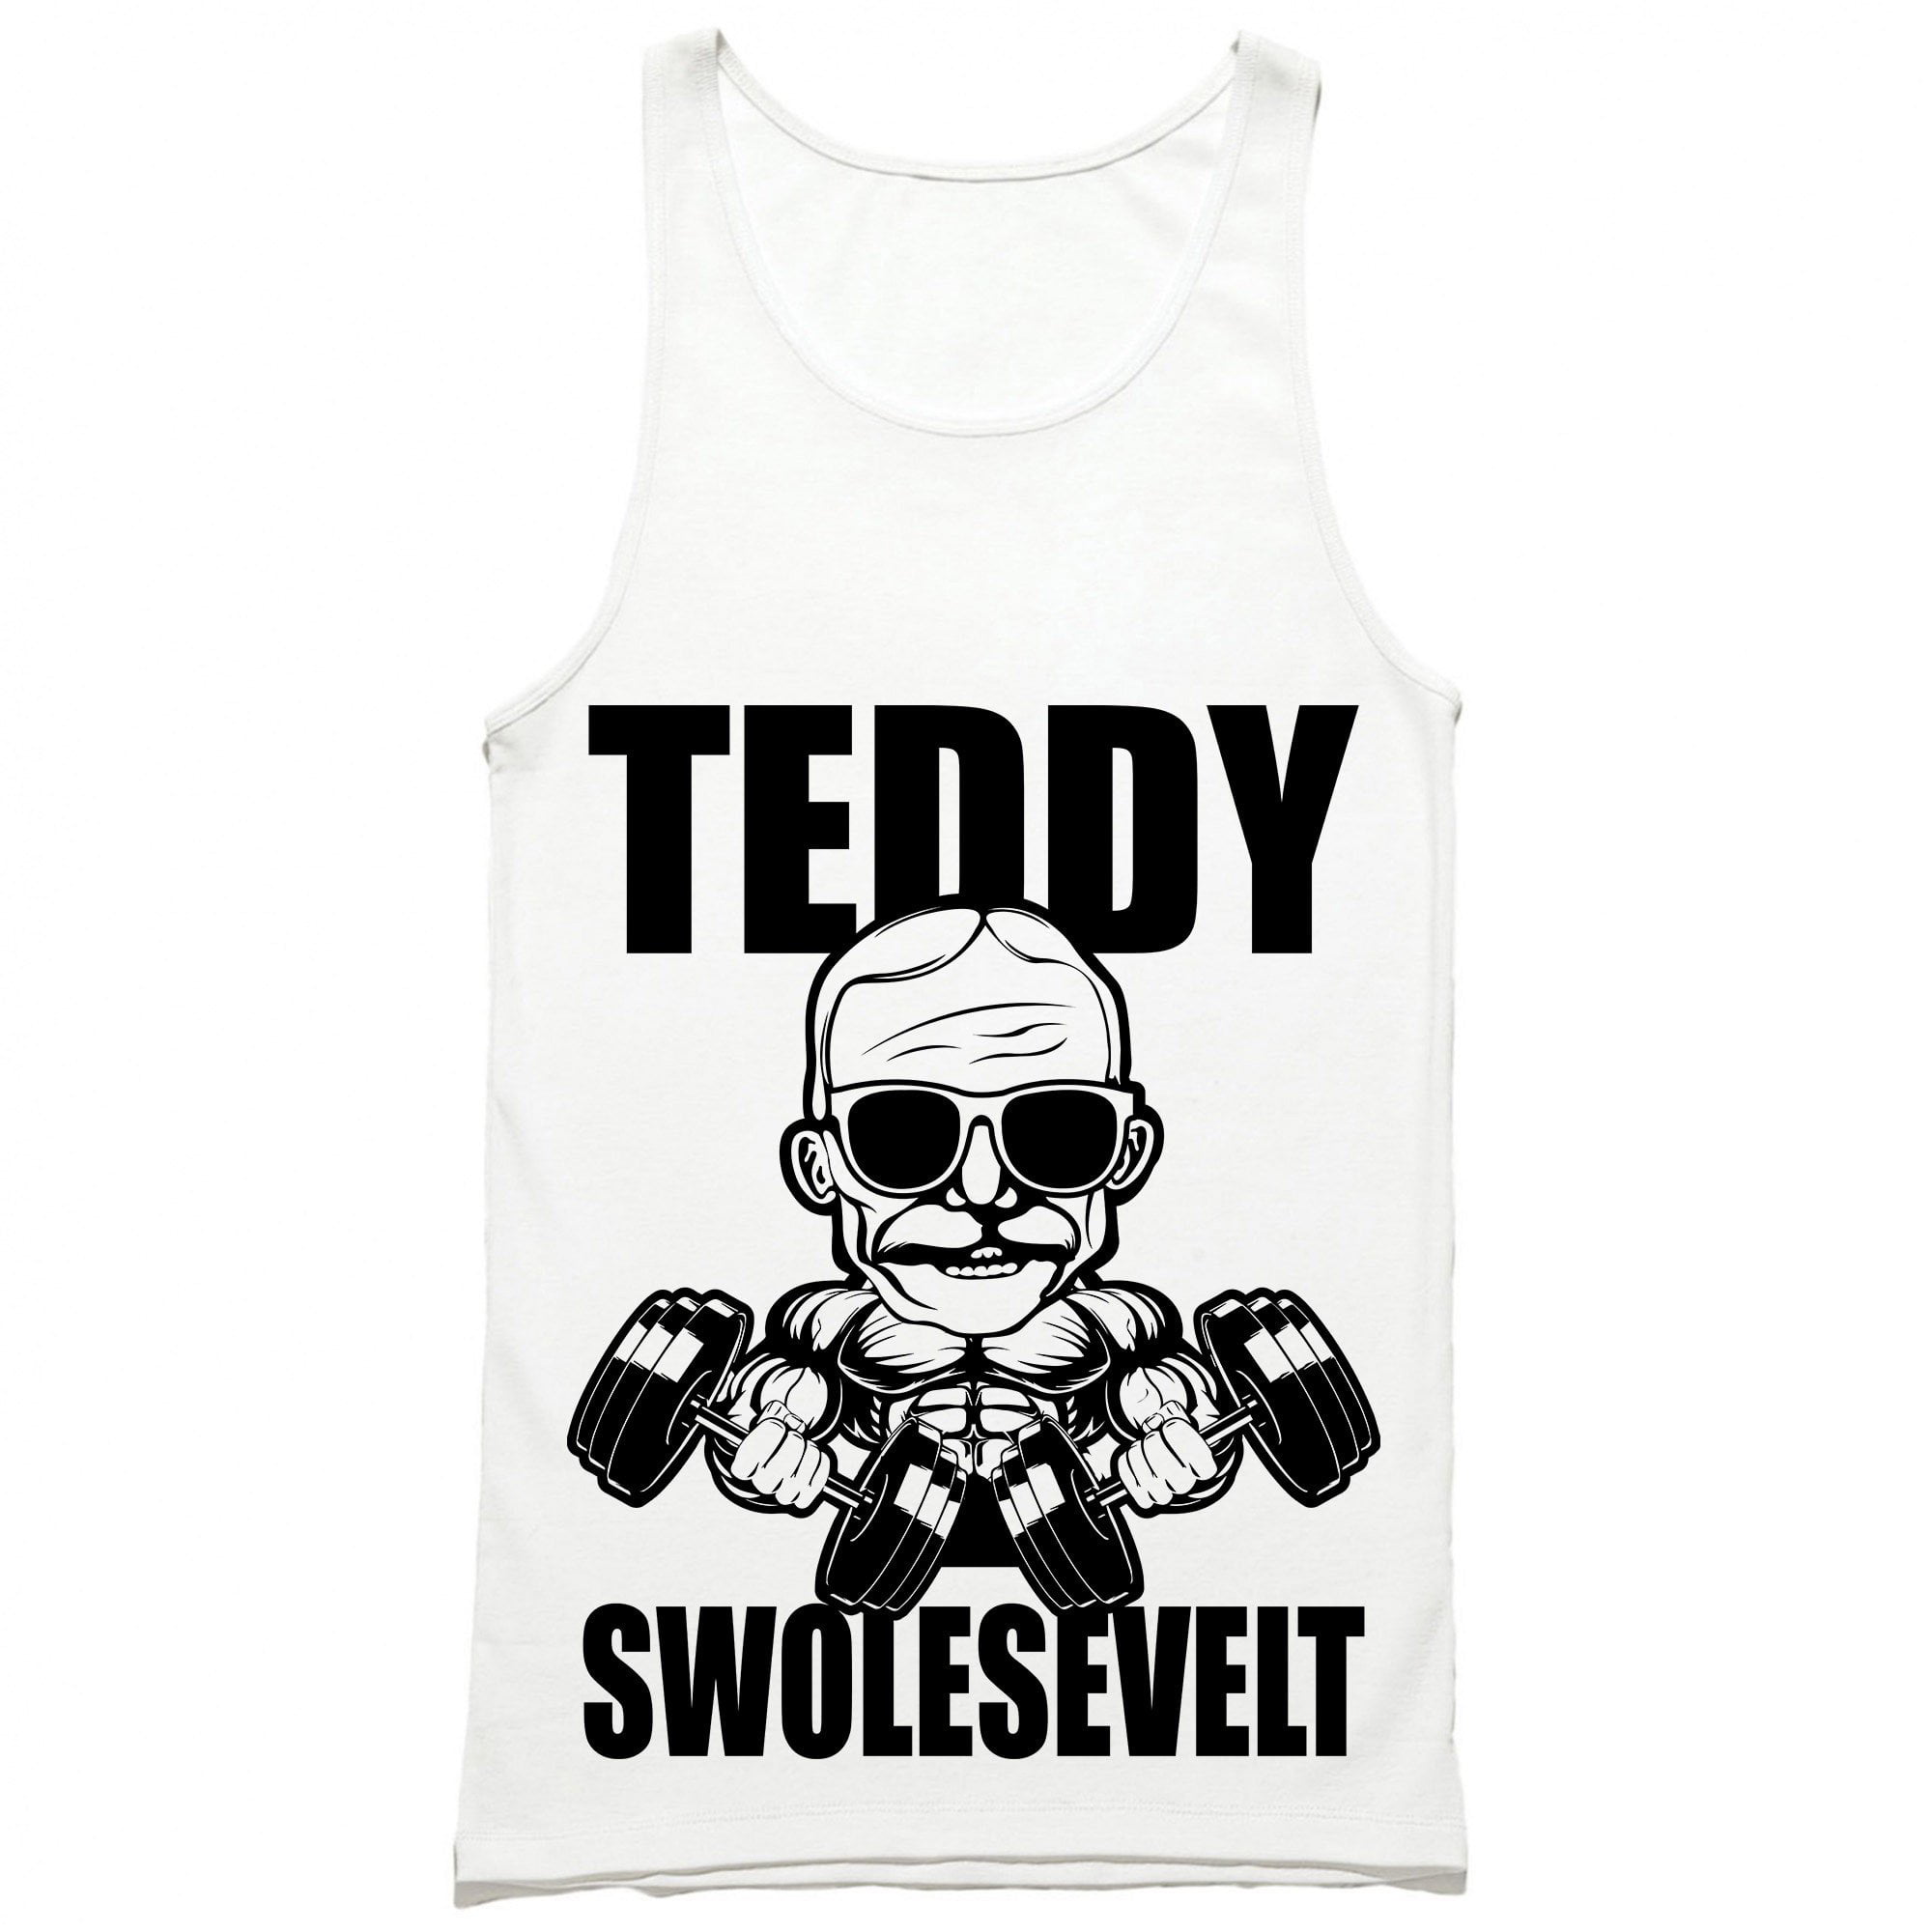 Teddy Swolesevelt Tank Top - Teddy Roosevelt Workout Shirt - Funny Gym Tank  Top 